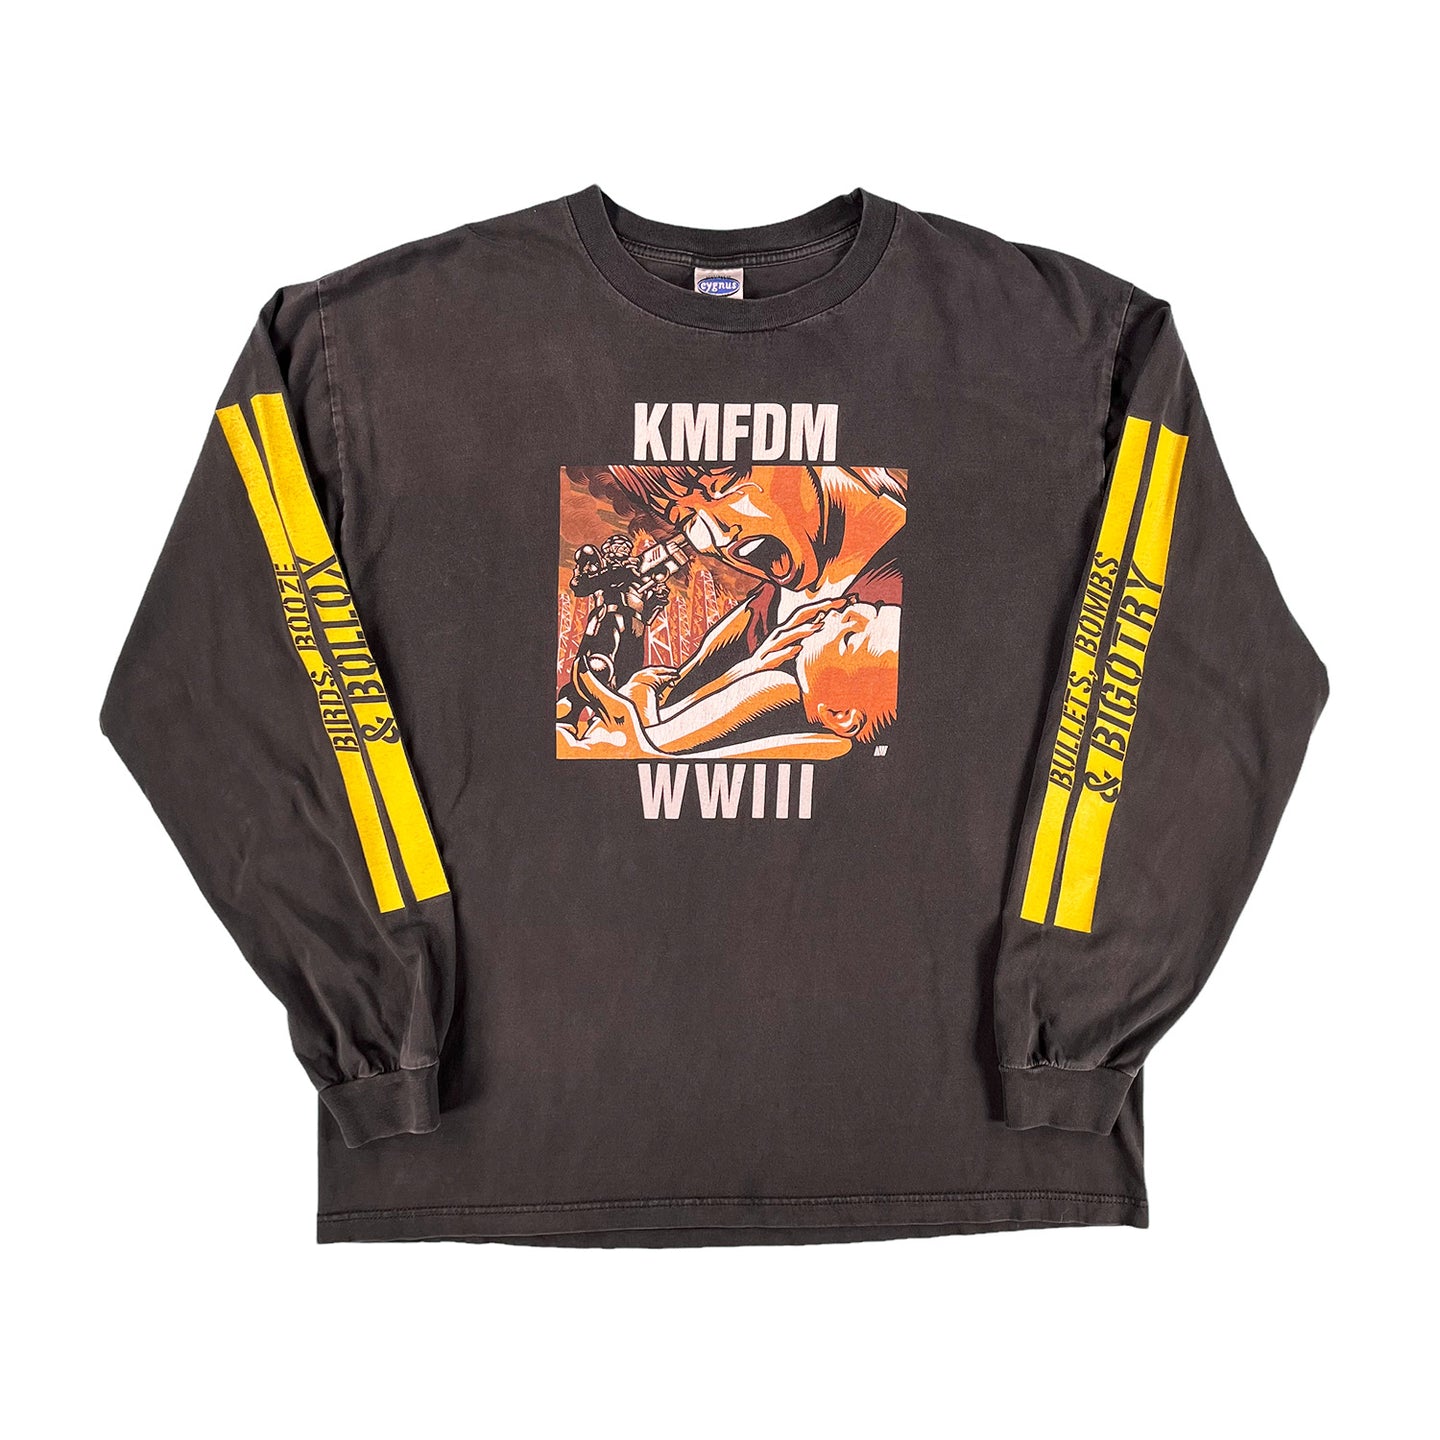 Vintage KMFDM WWIII longsleeve shirt XL